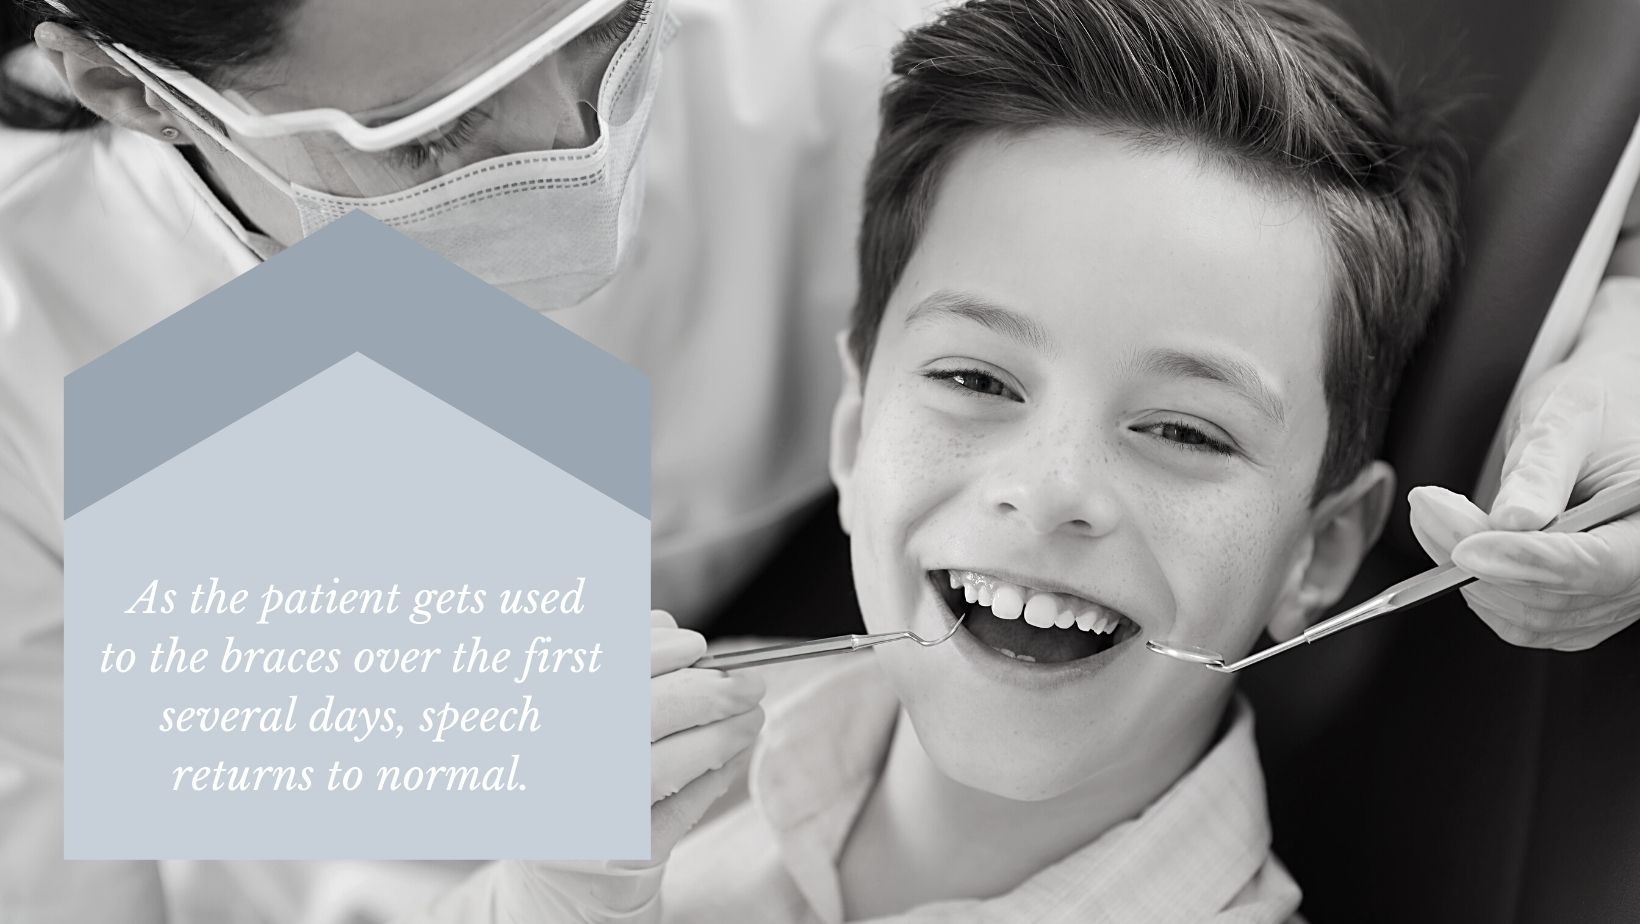 can lingual braces affect speech?